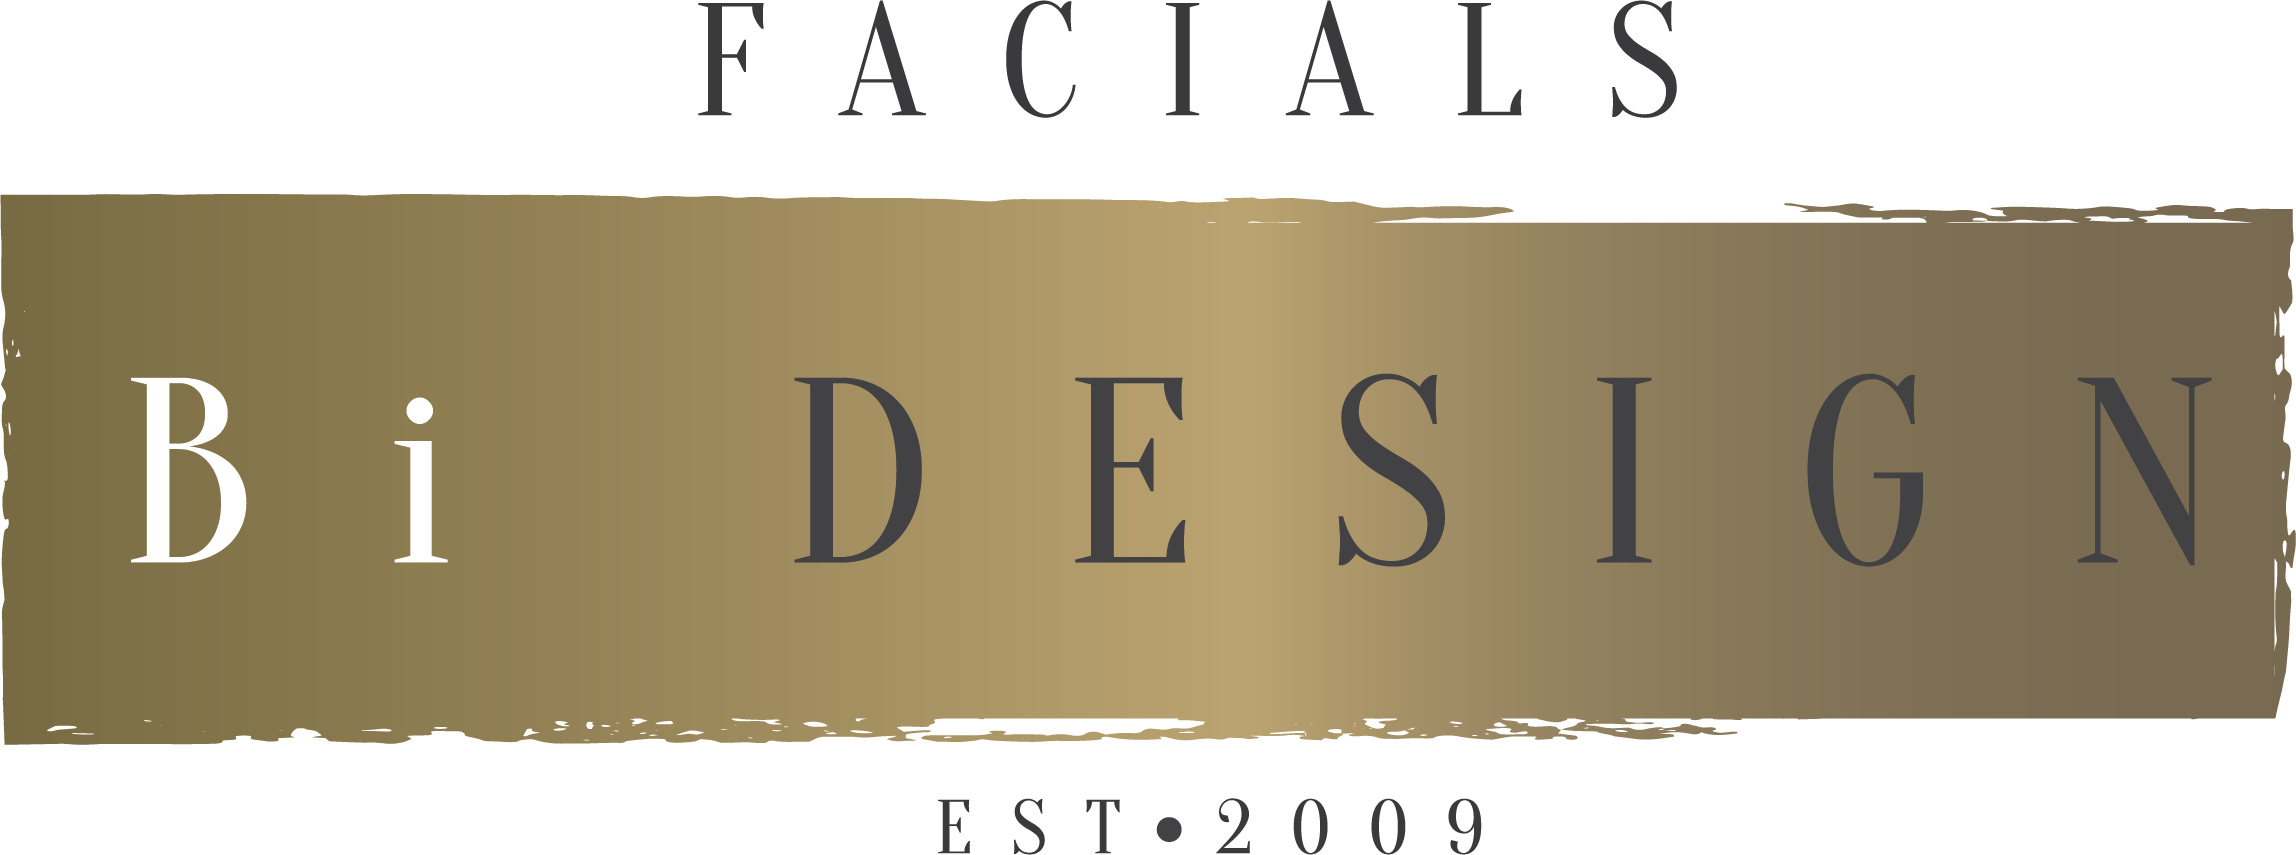 Facials BiDesign - Spa & Facial Treatments - Atlanta GA